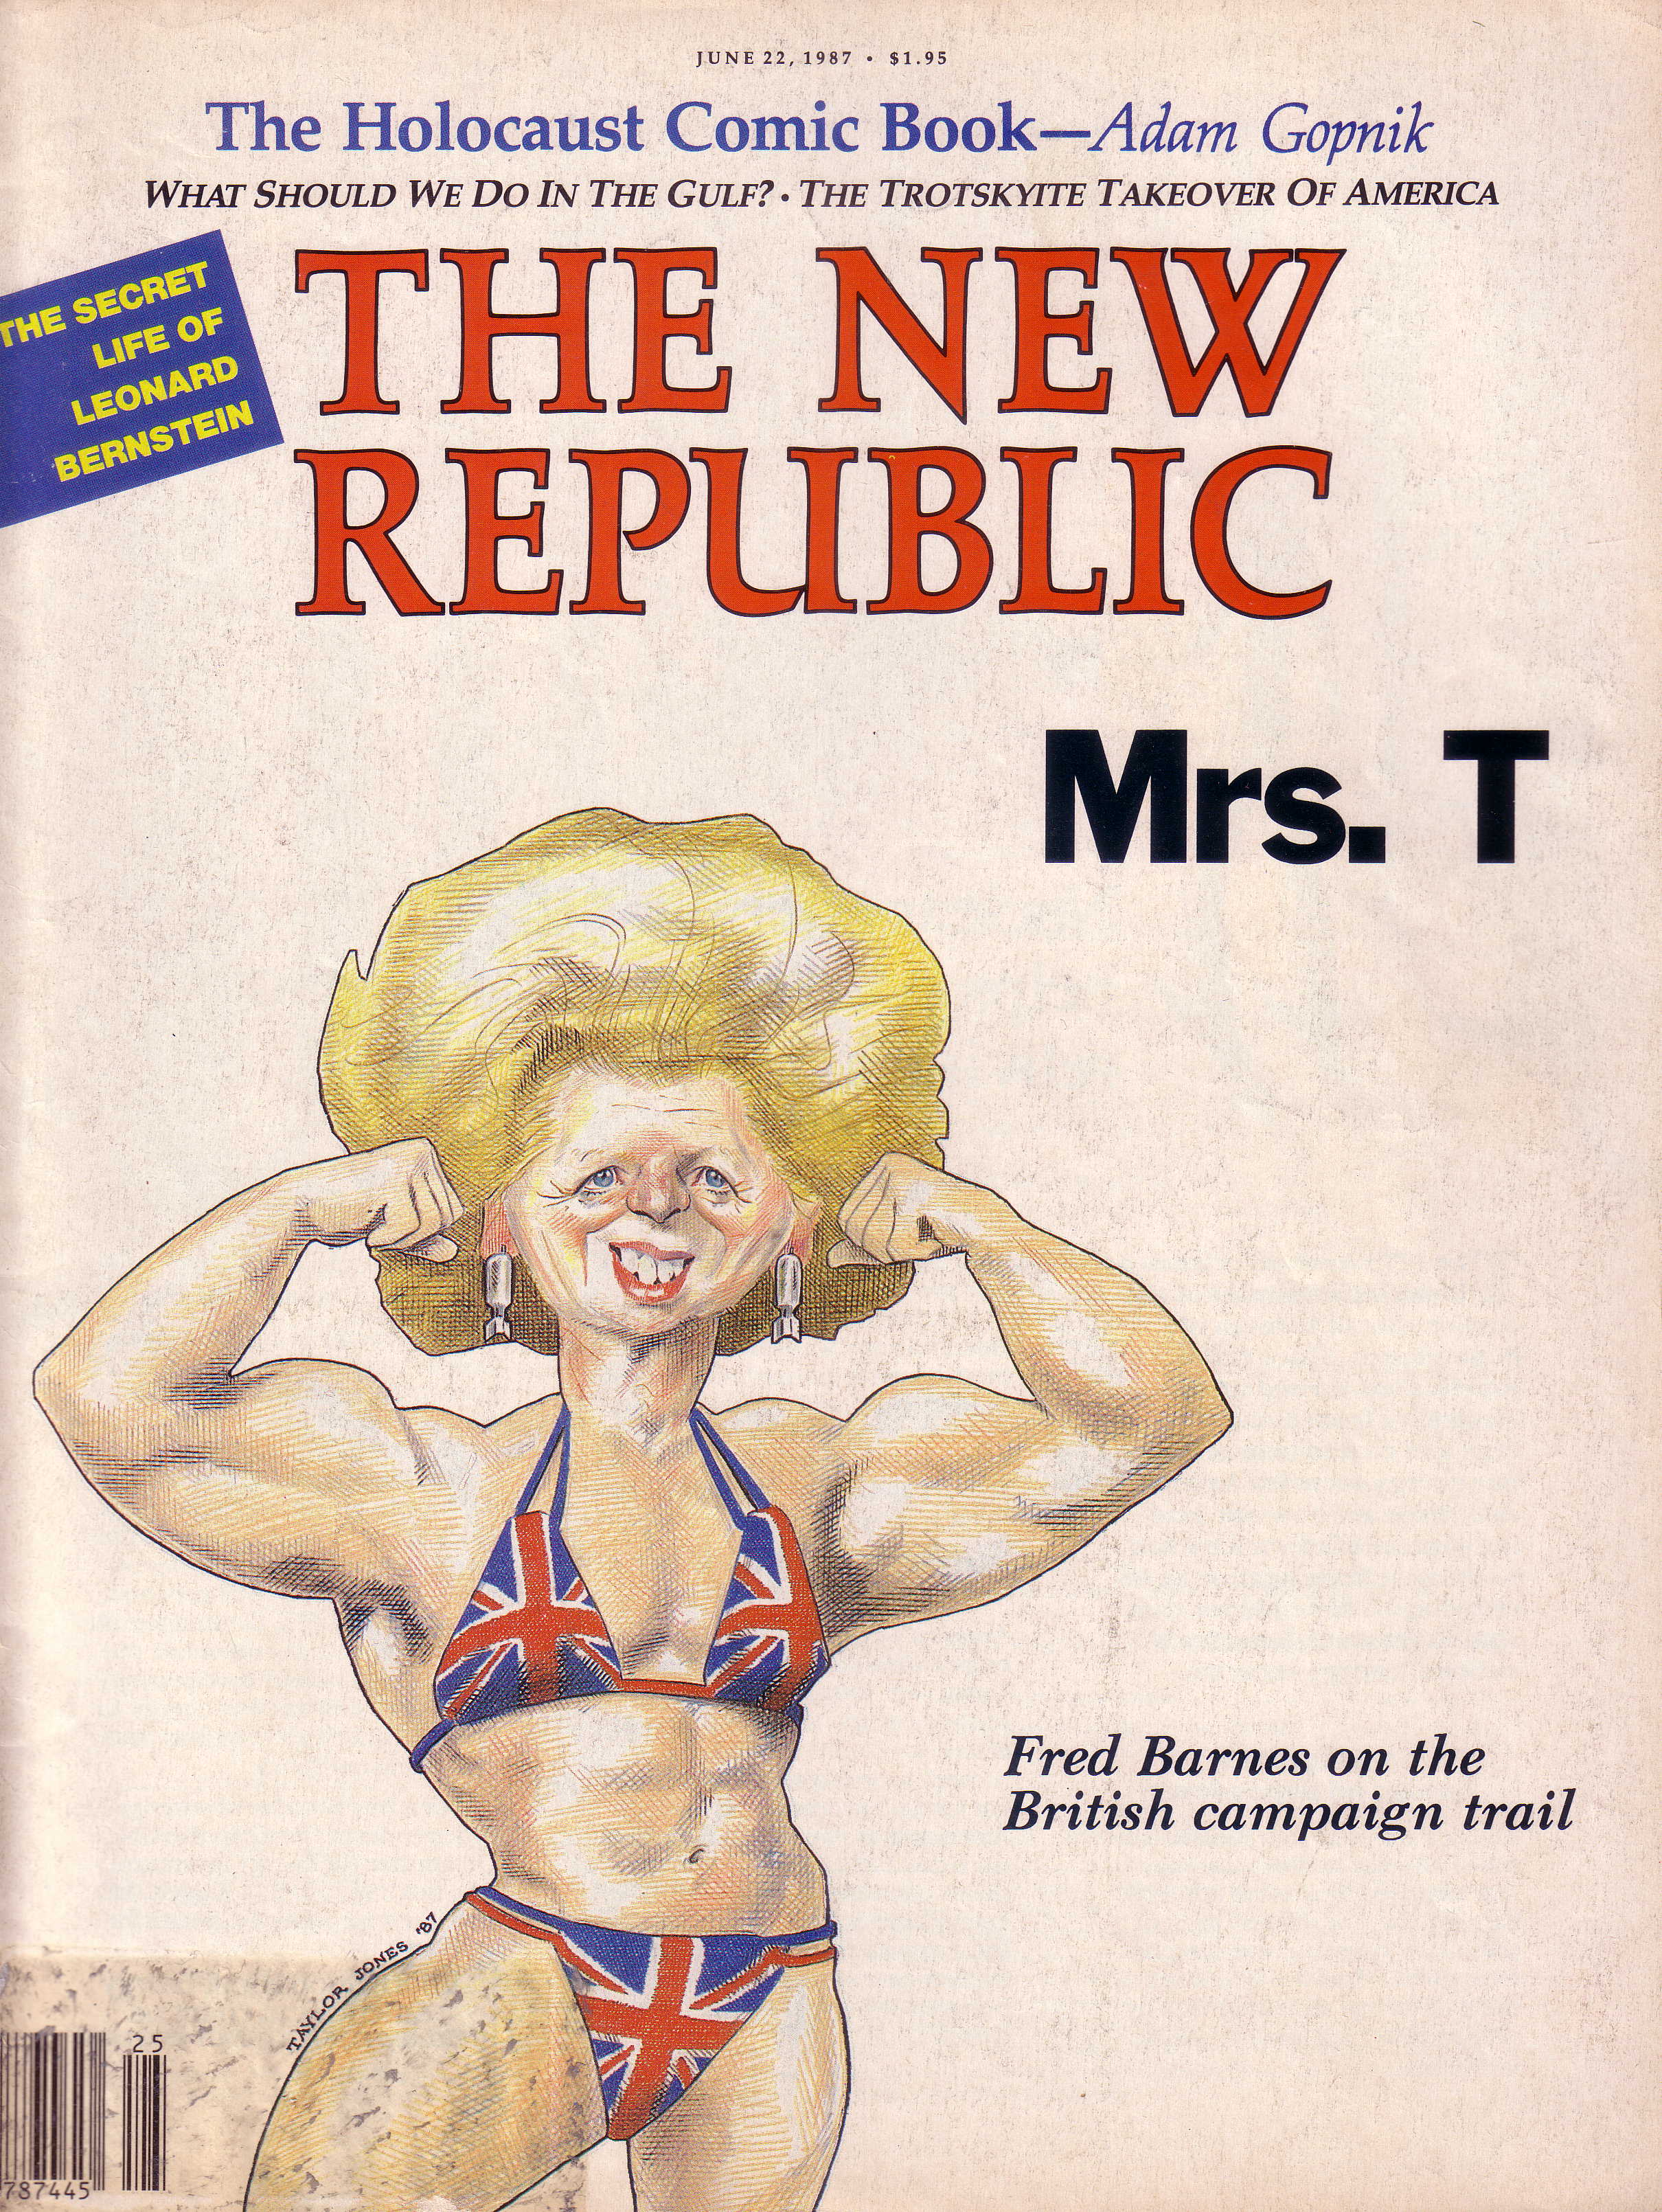 Thatcher as a muscle flexor - magazine cover 1987